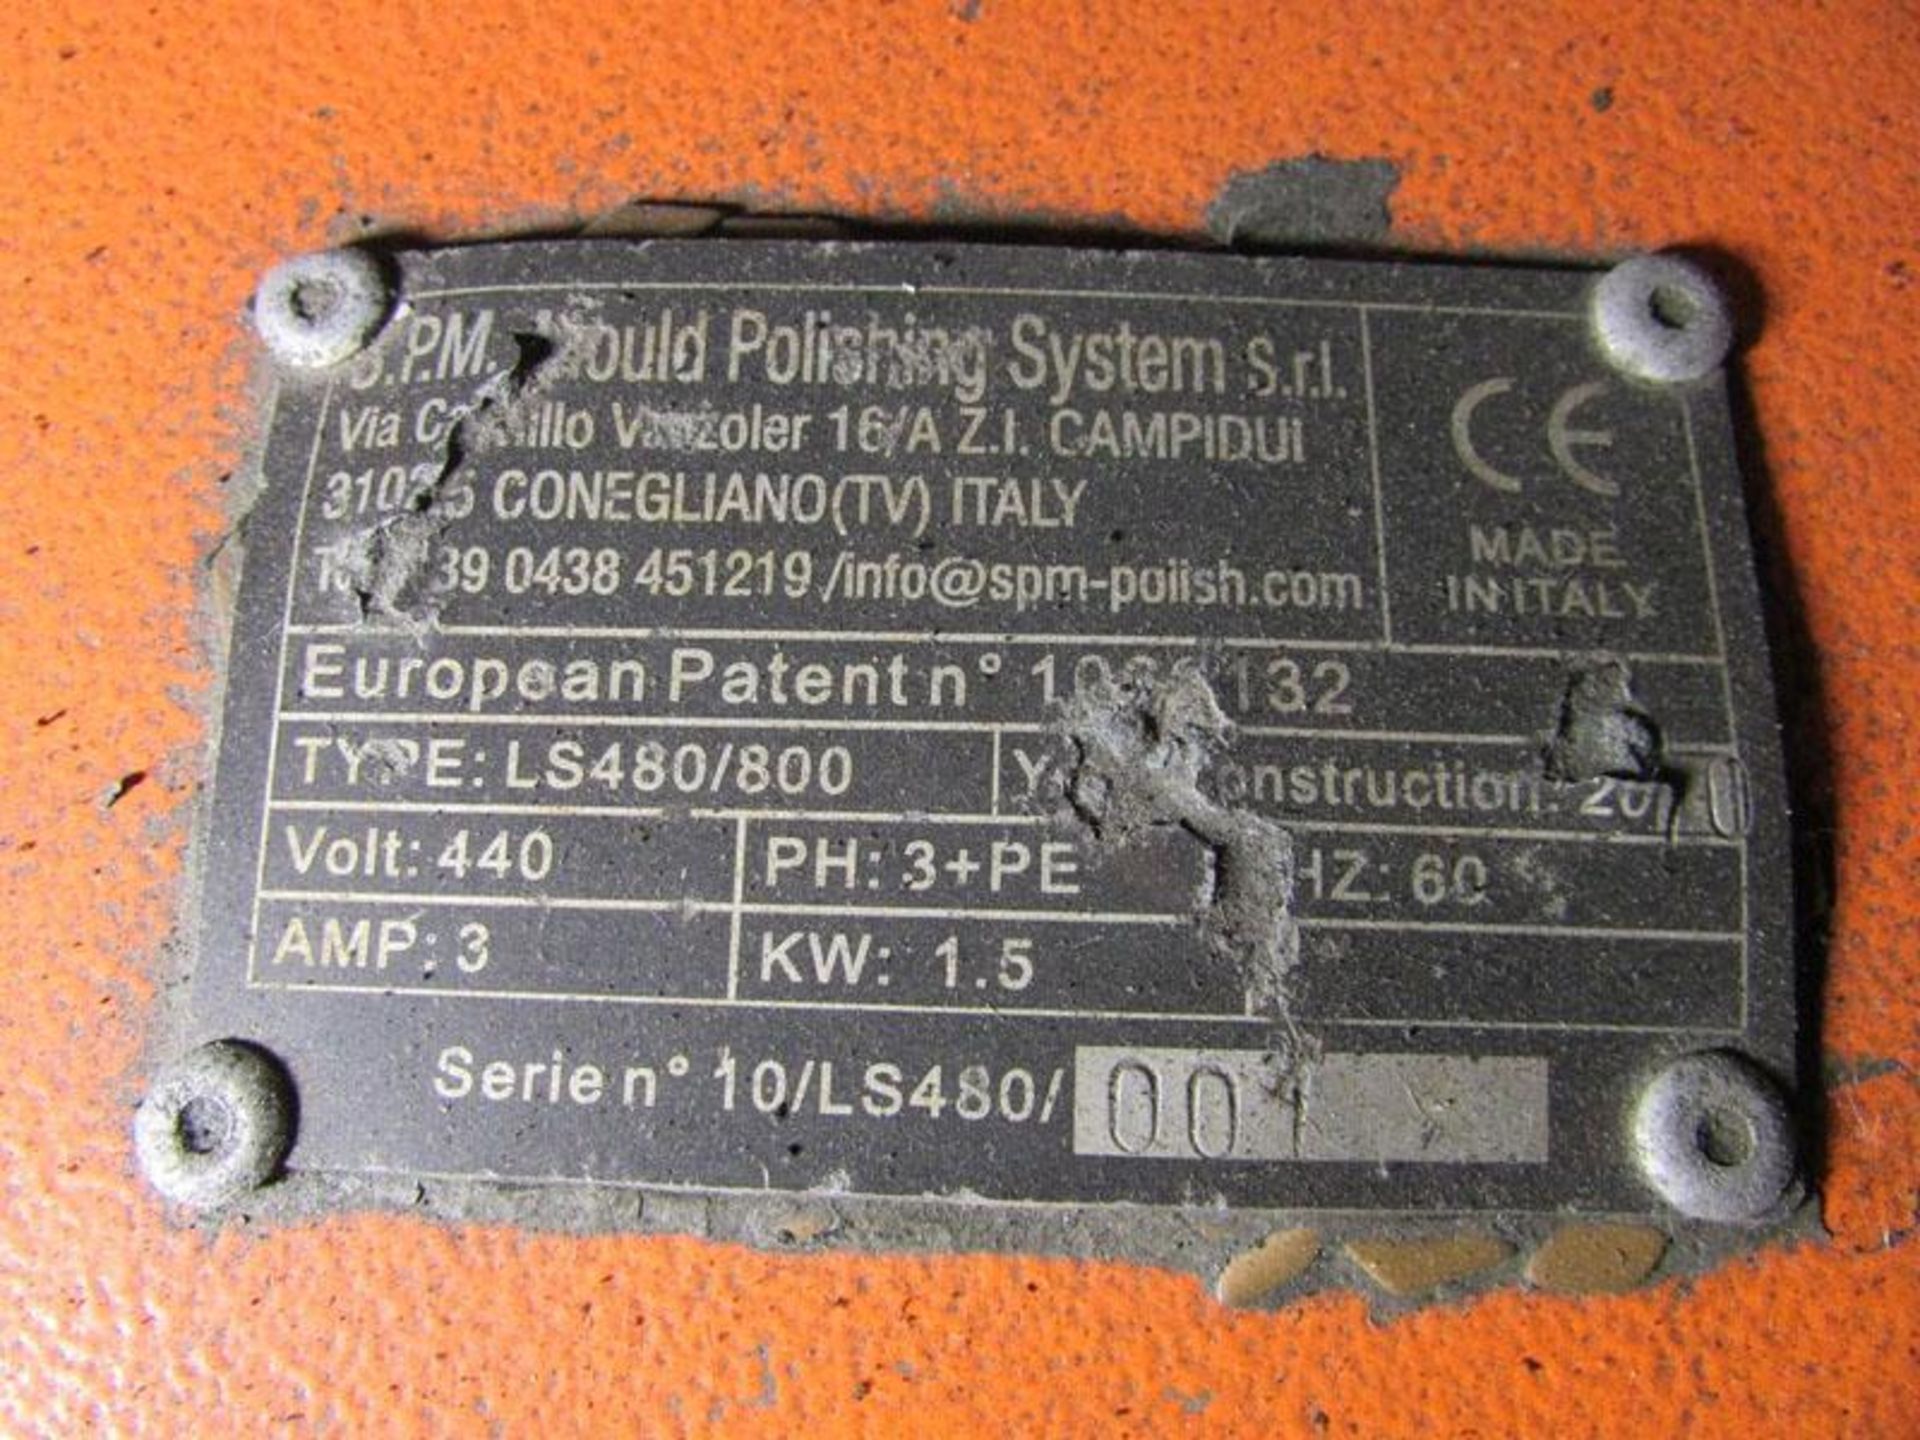 2010 S.P.M. Mould Polishing System LS480/800 Vibratory Mould Polishing Machine - Image 6 of 6